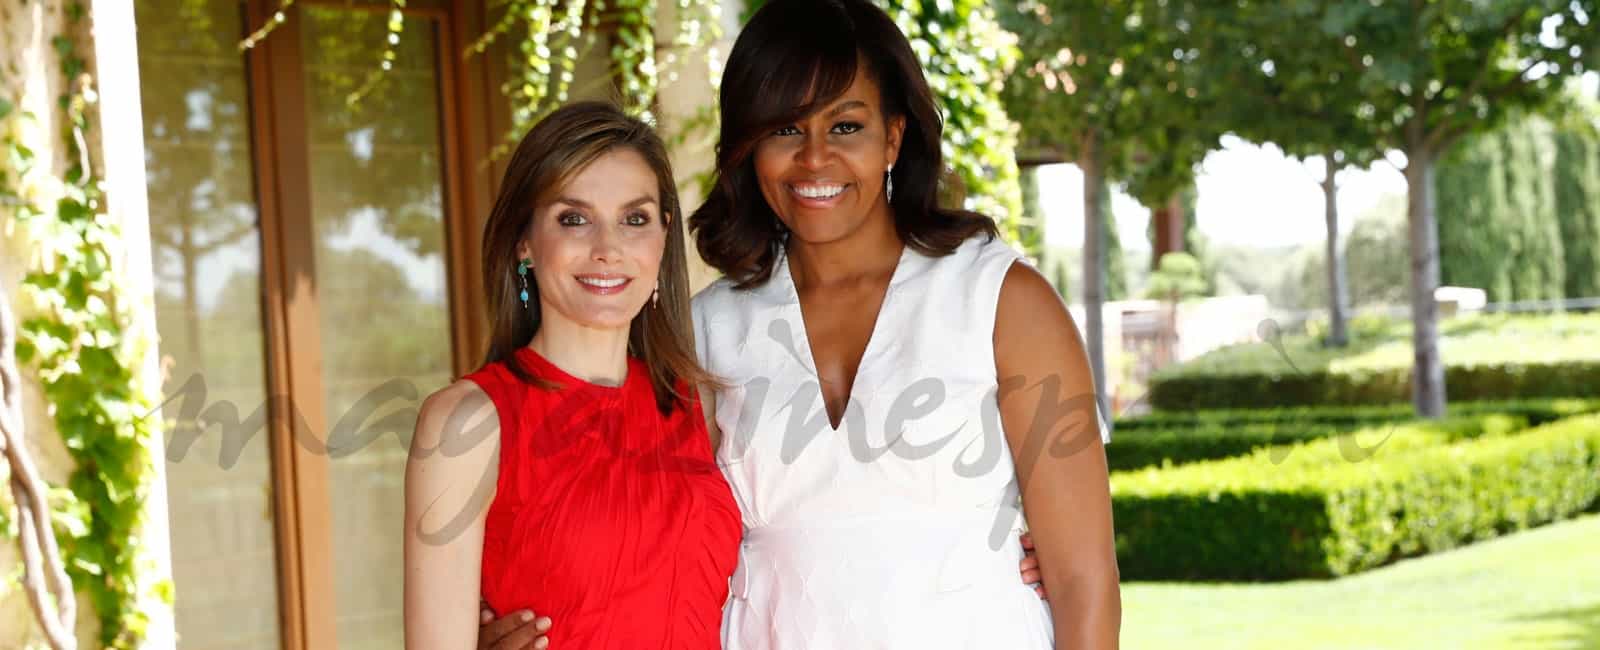 El cariñoso reencuentro de la reina Letizia y Michelle Obama